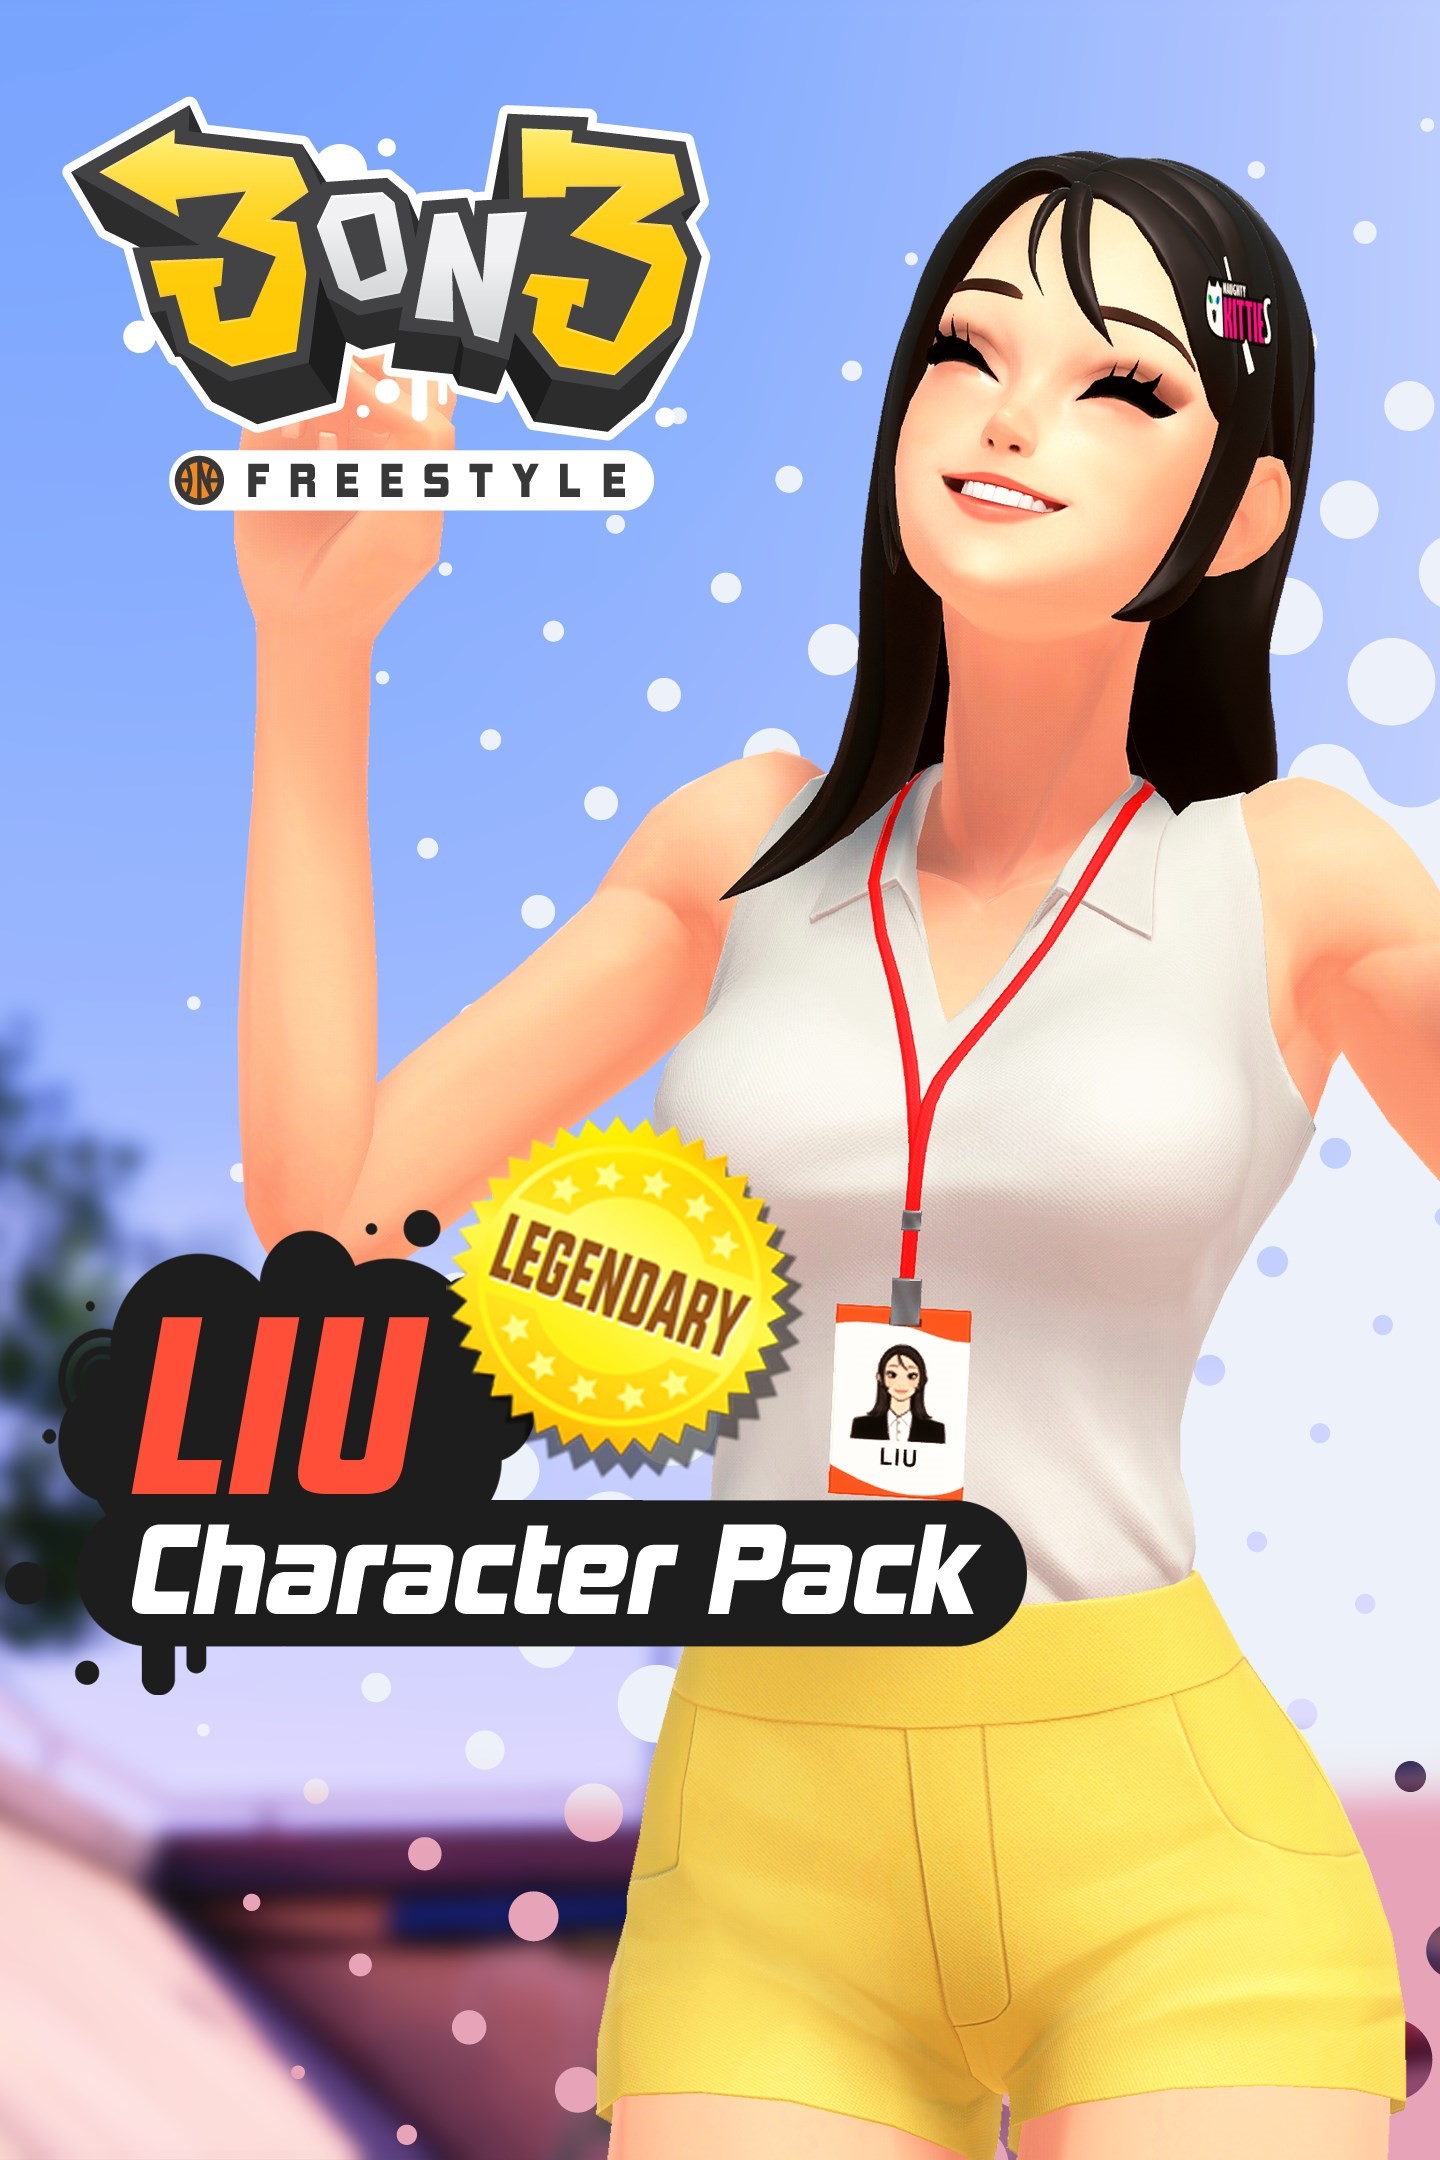 3on3 FreeStyle - Liu Legendary Package/Xbox